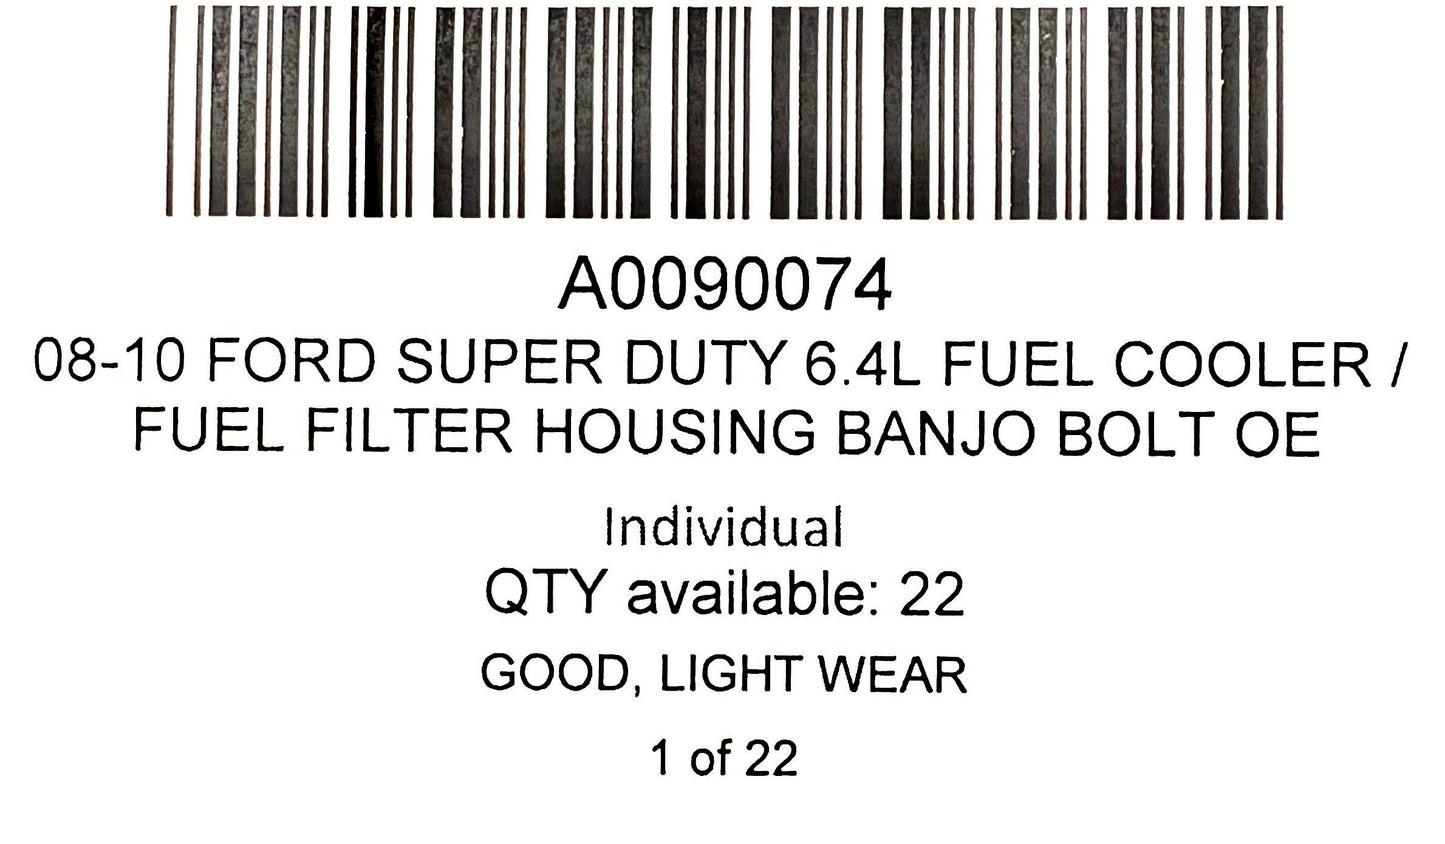 08-10 Ford Super Duty 6.4L Fuel Cooler / Fuel Filter Housing Banjo Bolt OE